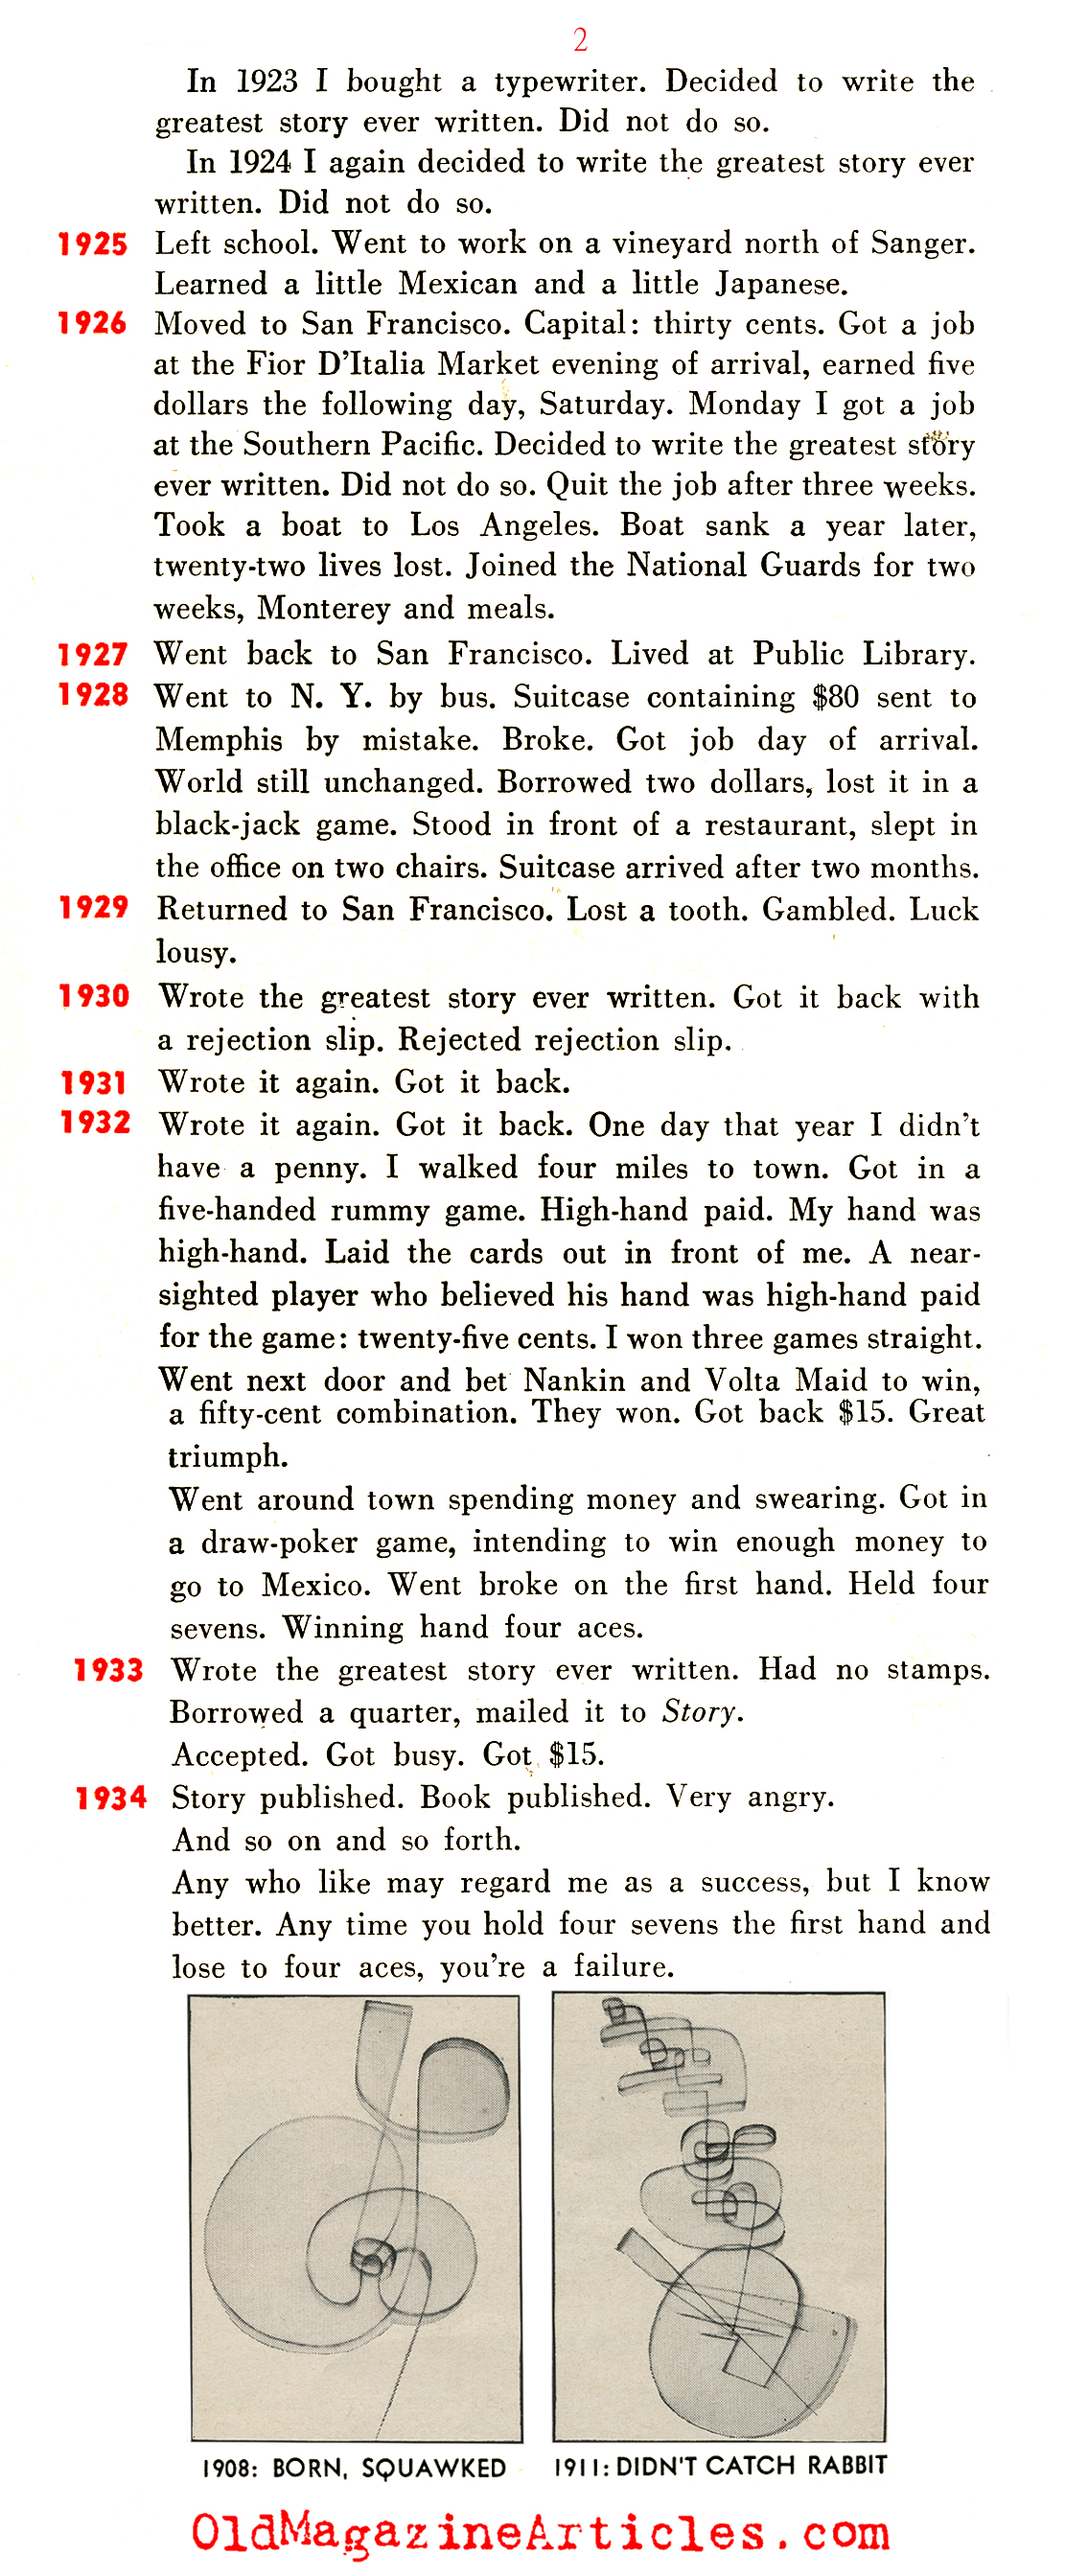 William Saroyan on William Saroyan (Stage Magazine, 1940)